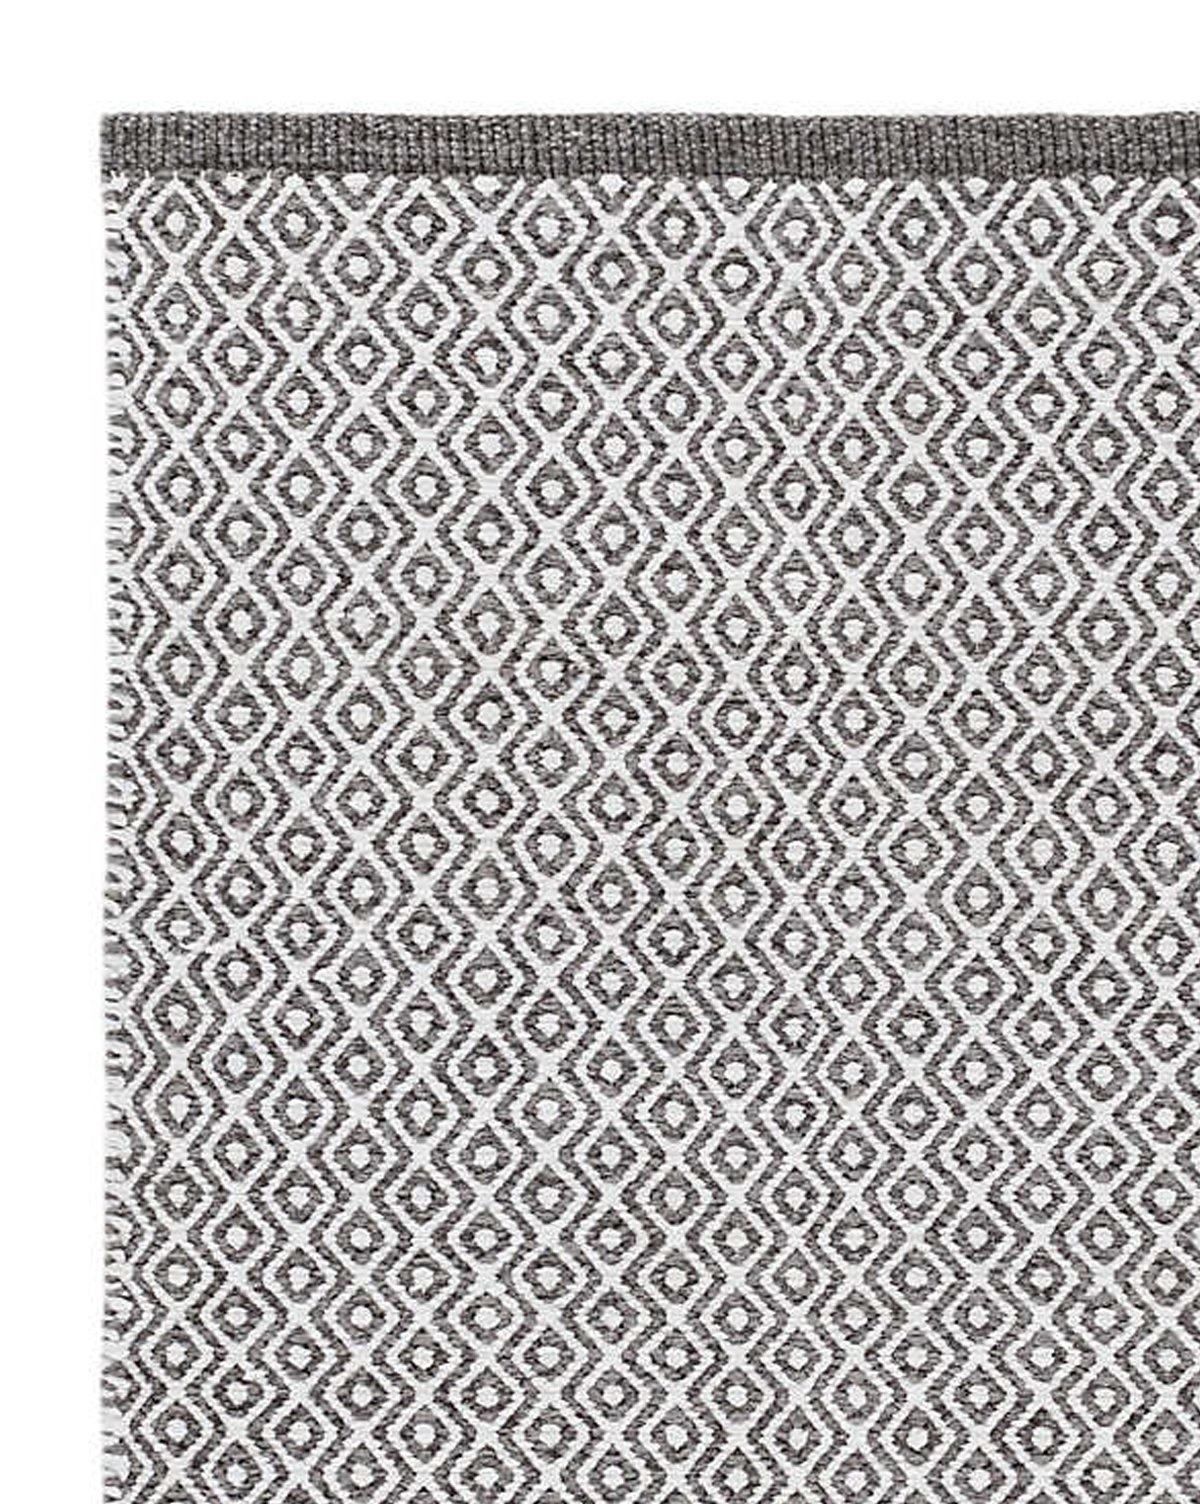 FACET CHENILLE GRAY INDOOR/OUTDOOR RUG, 3' x 5' - Image 1